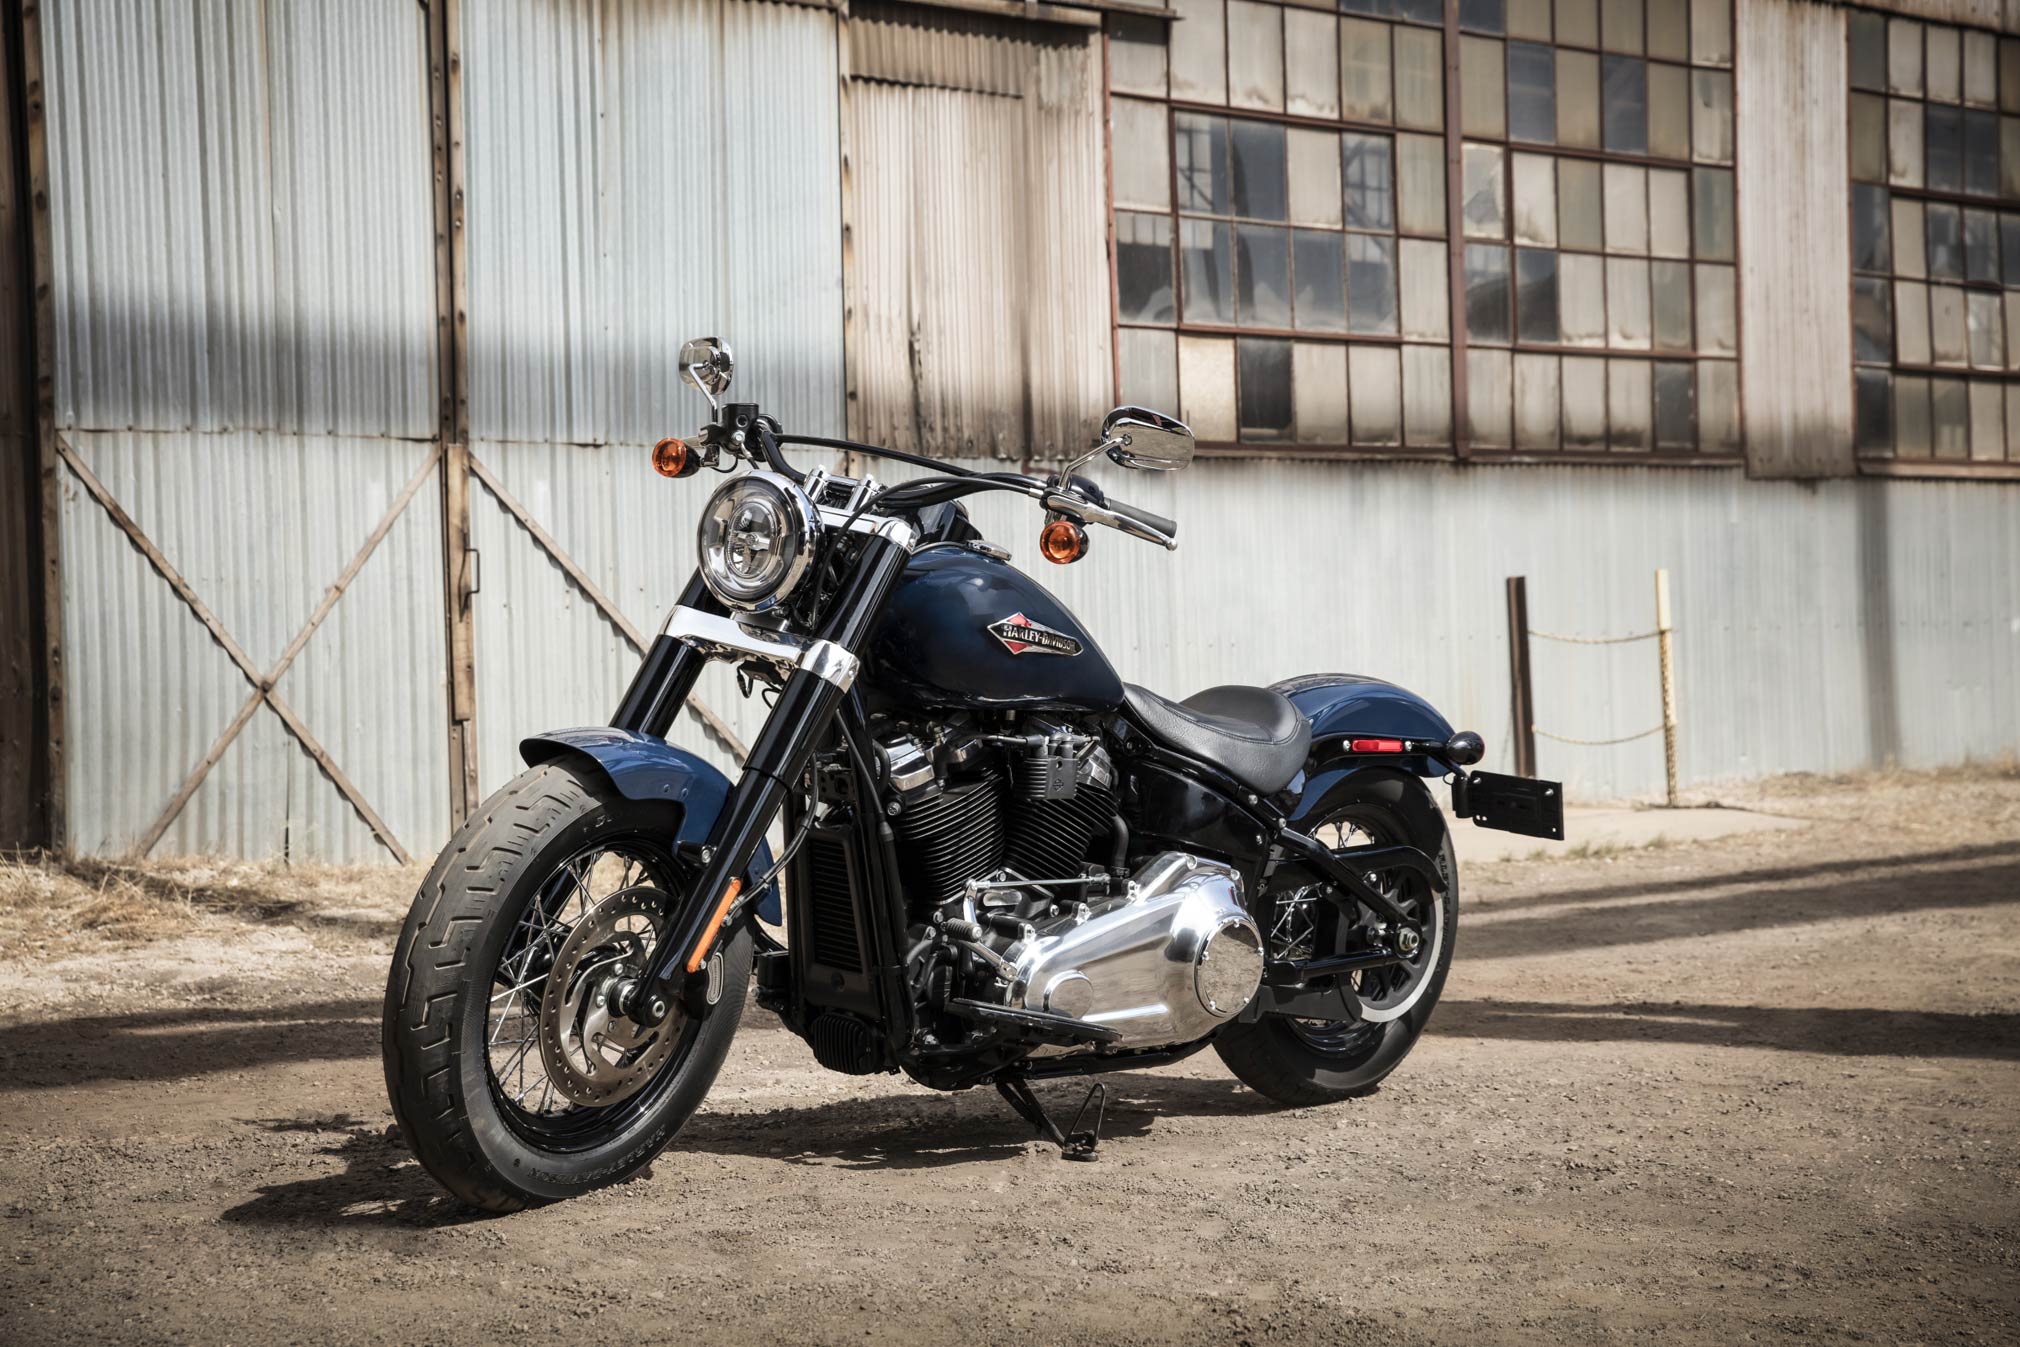 2020 Harley-Davidson Softail Slim Guide • Total Motorcycle